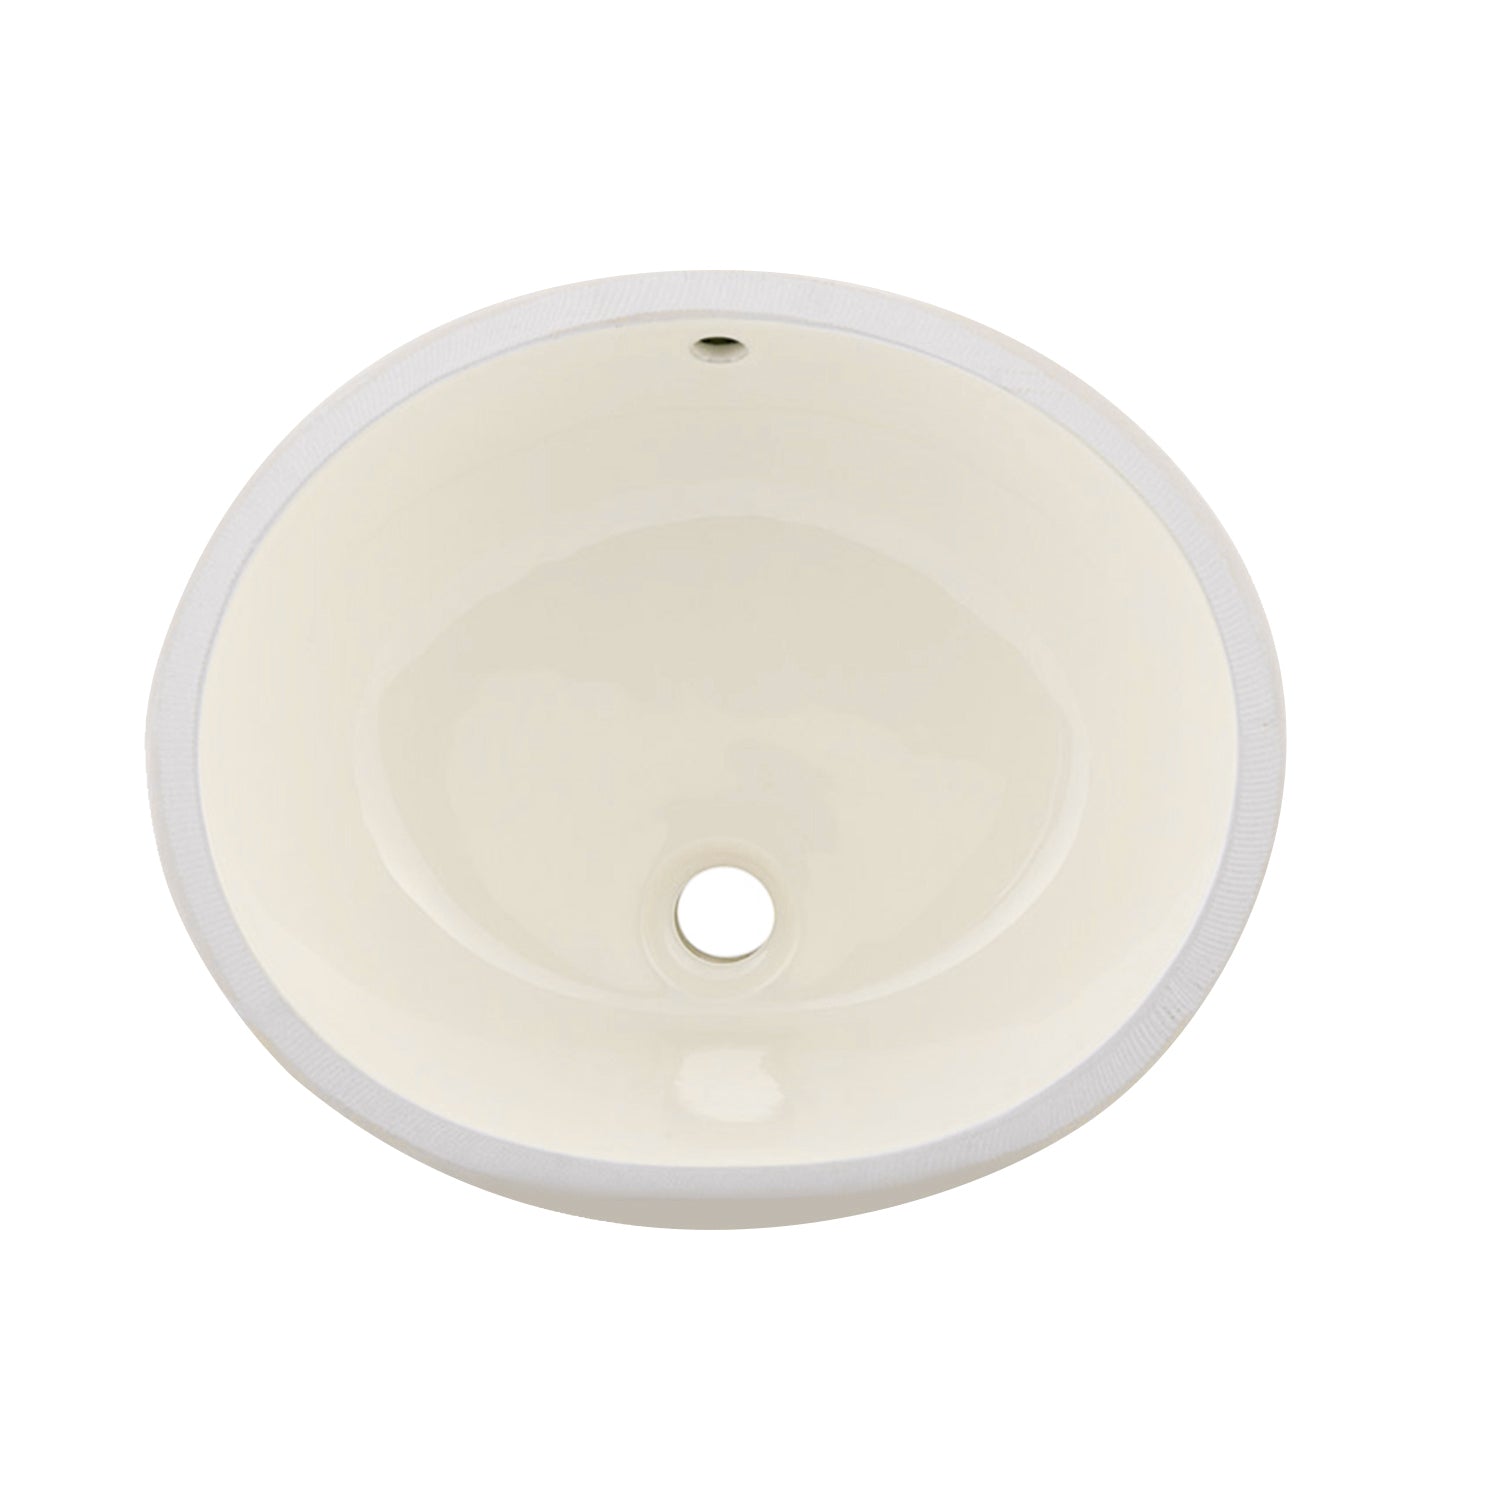 DAX Ceramic Oval Single Bowl Undermount Bathroom Sink, Ivory Finish, 19-1/2 x 16 x 8 Inches (BSN-201)